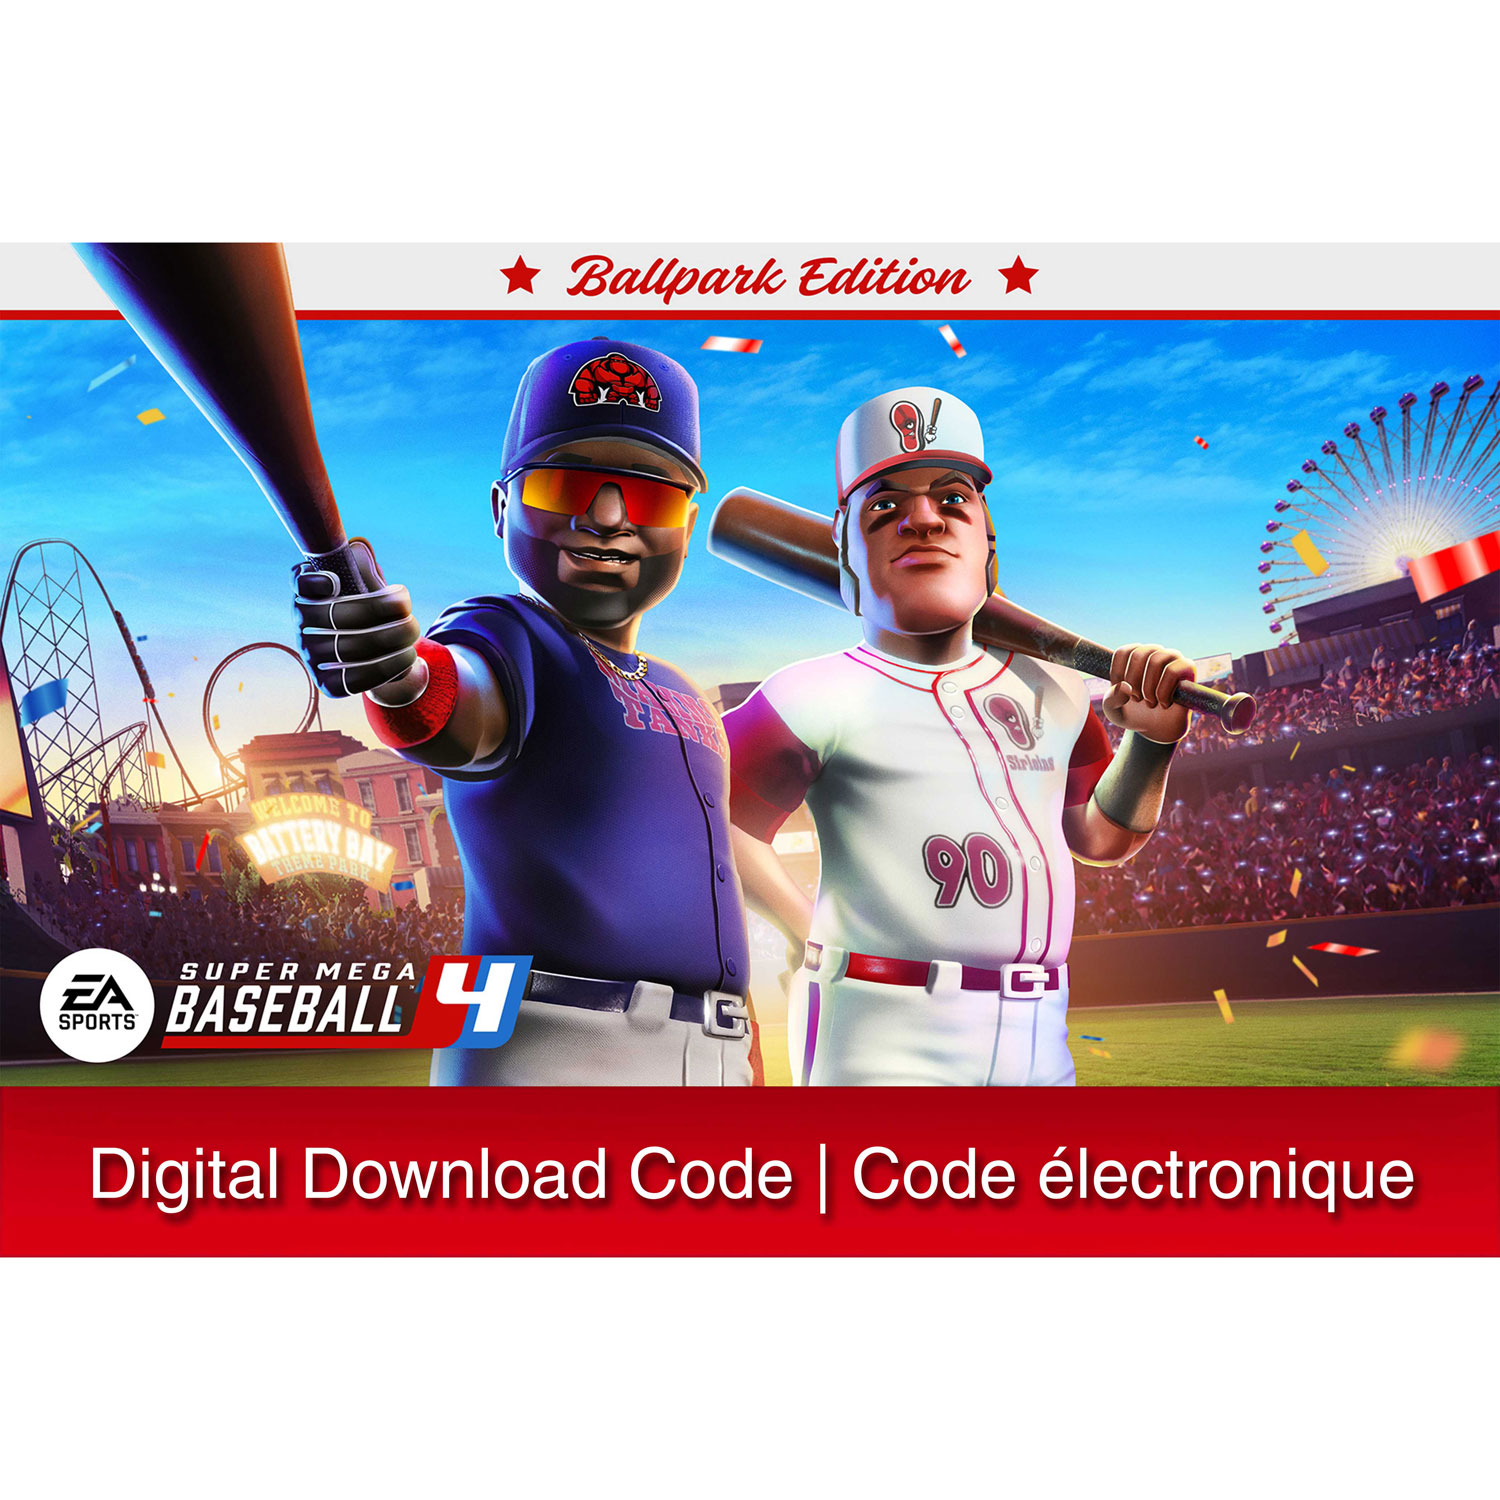 Super Mega Baseball 4 Ballpark Edition (Switch) - Digital Download